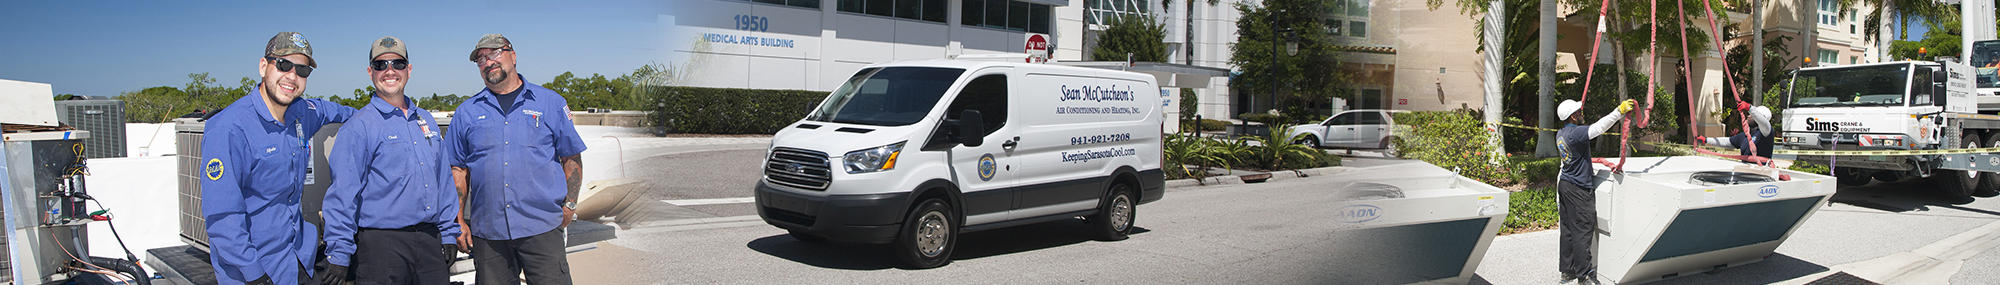 Sean McCutcheon's Service vehicle at a Sarasota home and Sarasota skyline collage. 